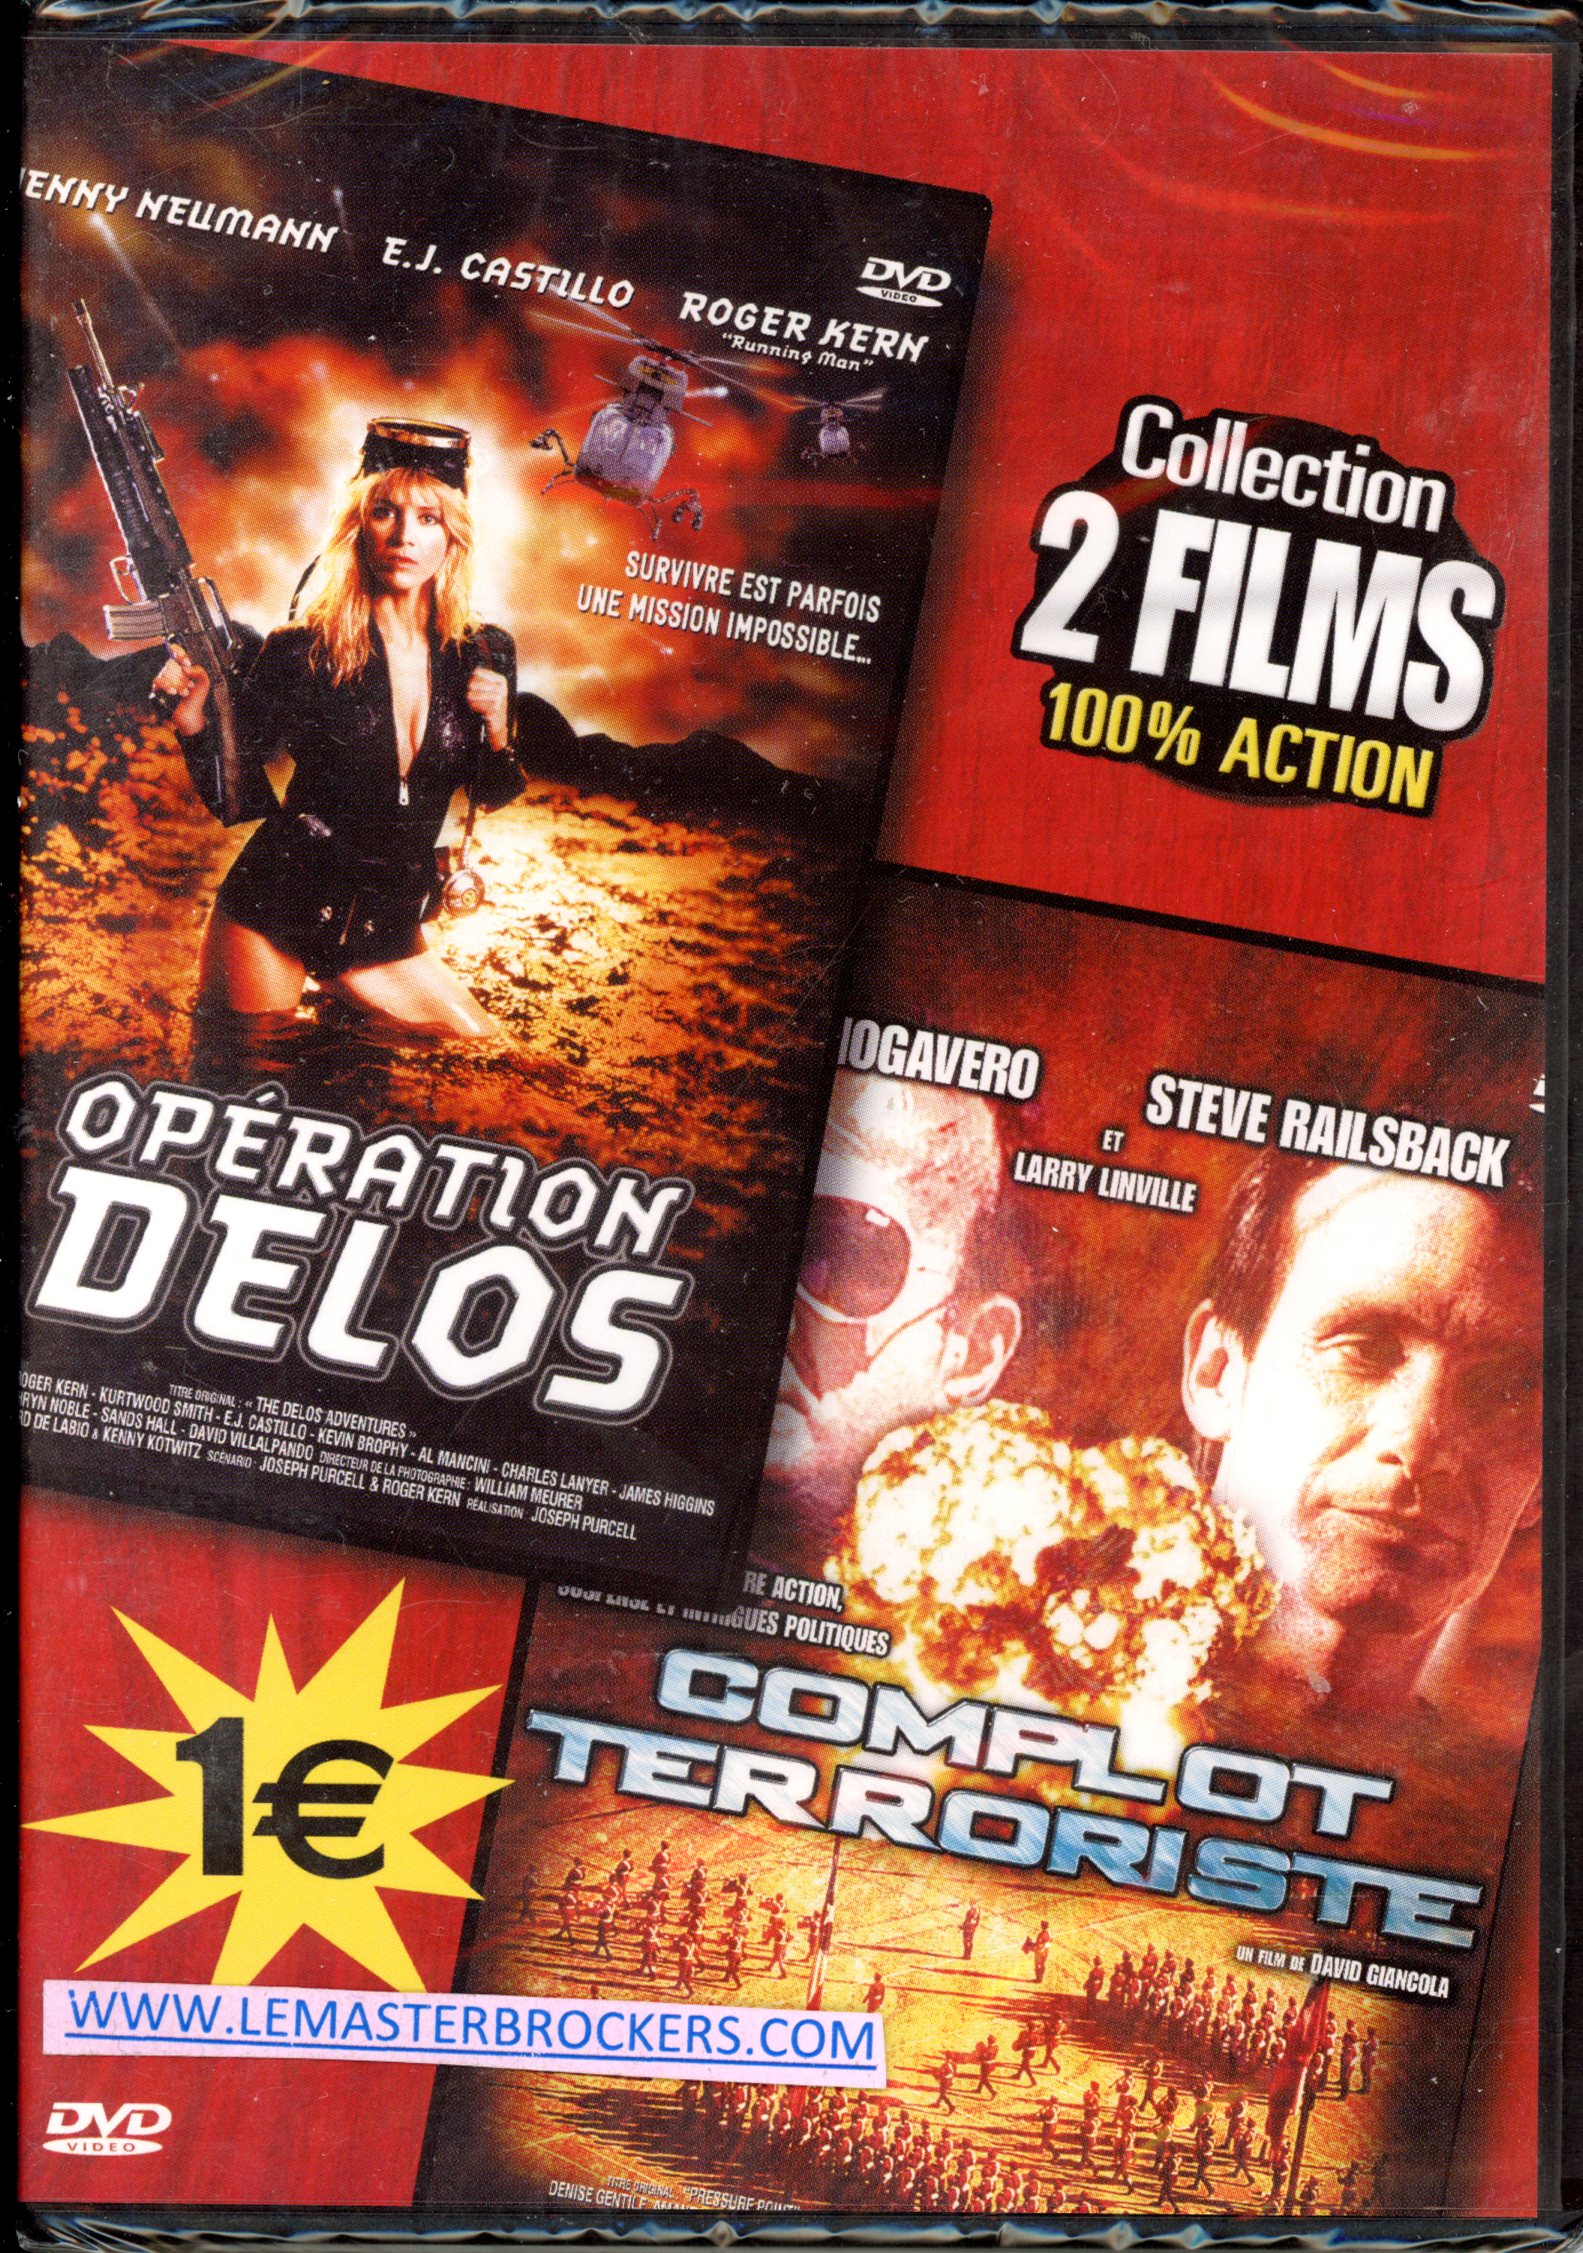 DVD FILM OPÉRATION DELOS ET FILM COMPLOT TERRORISTE